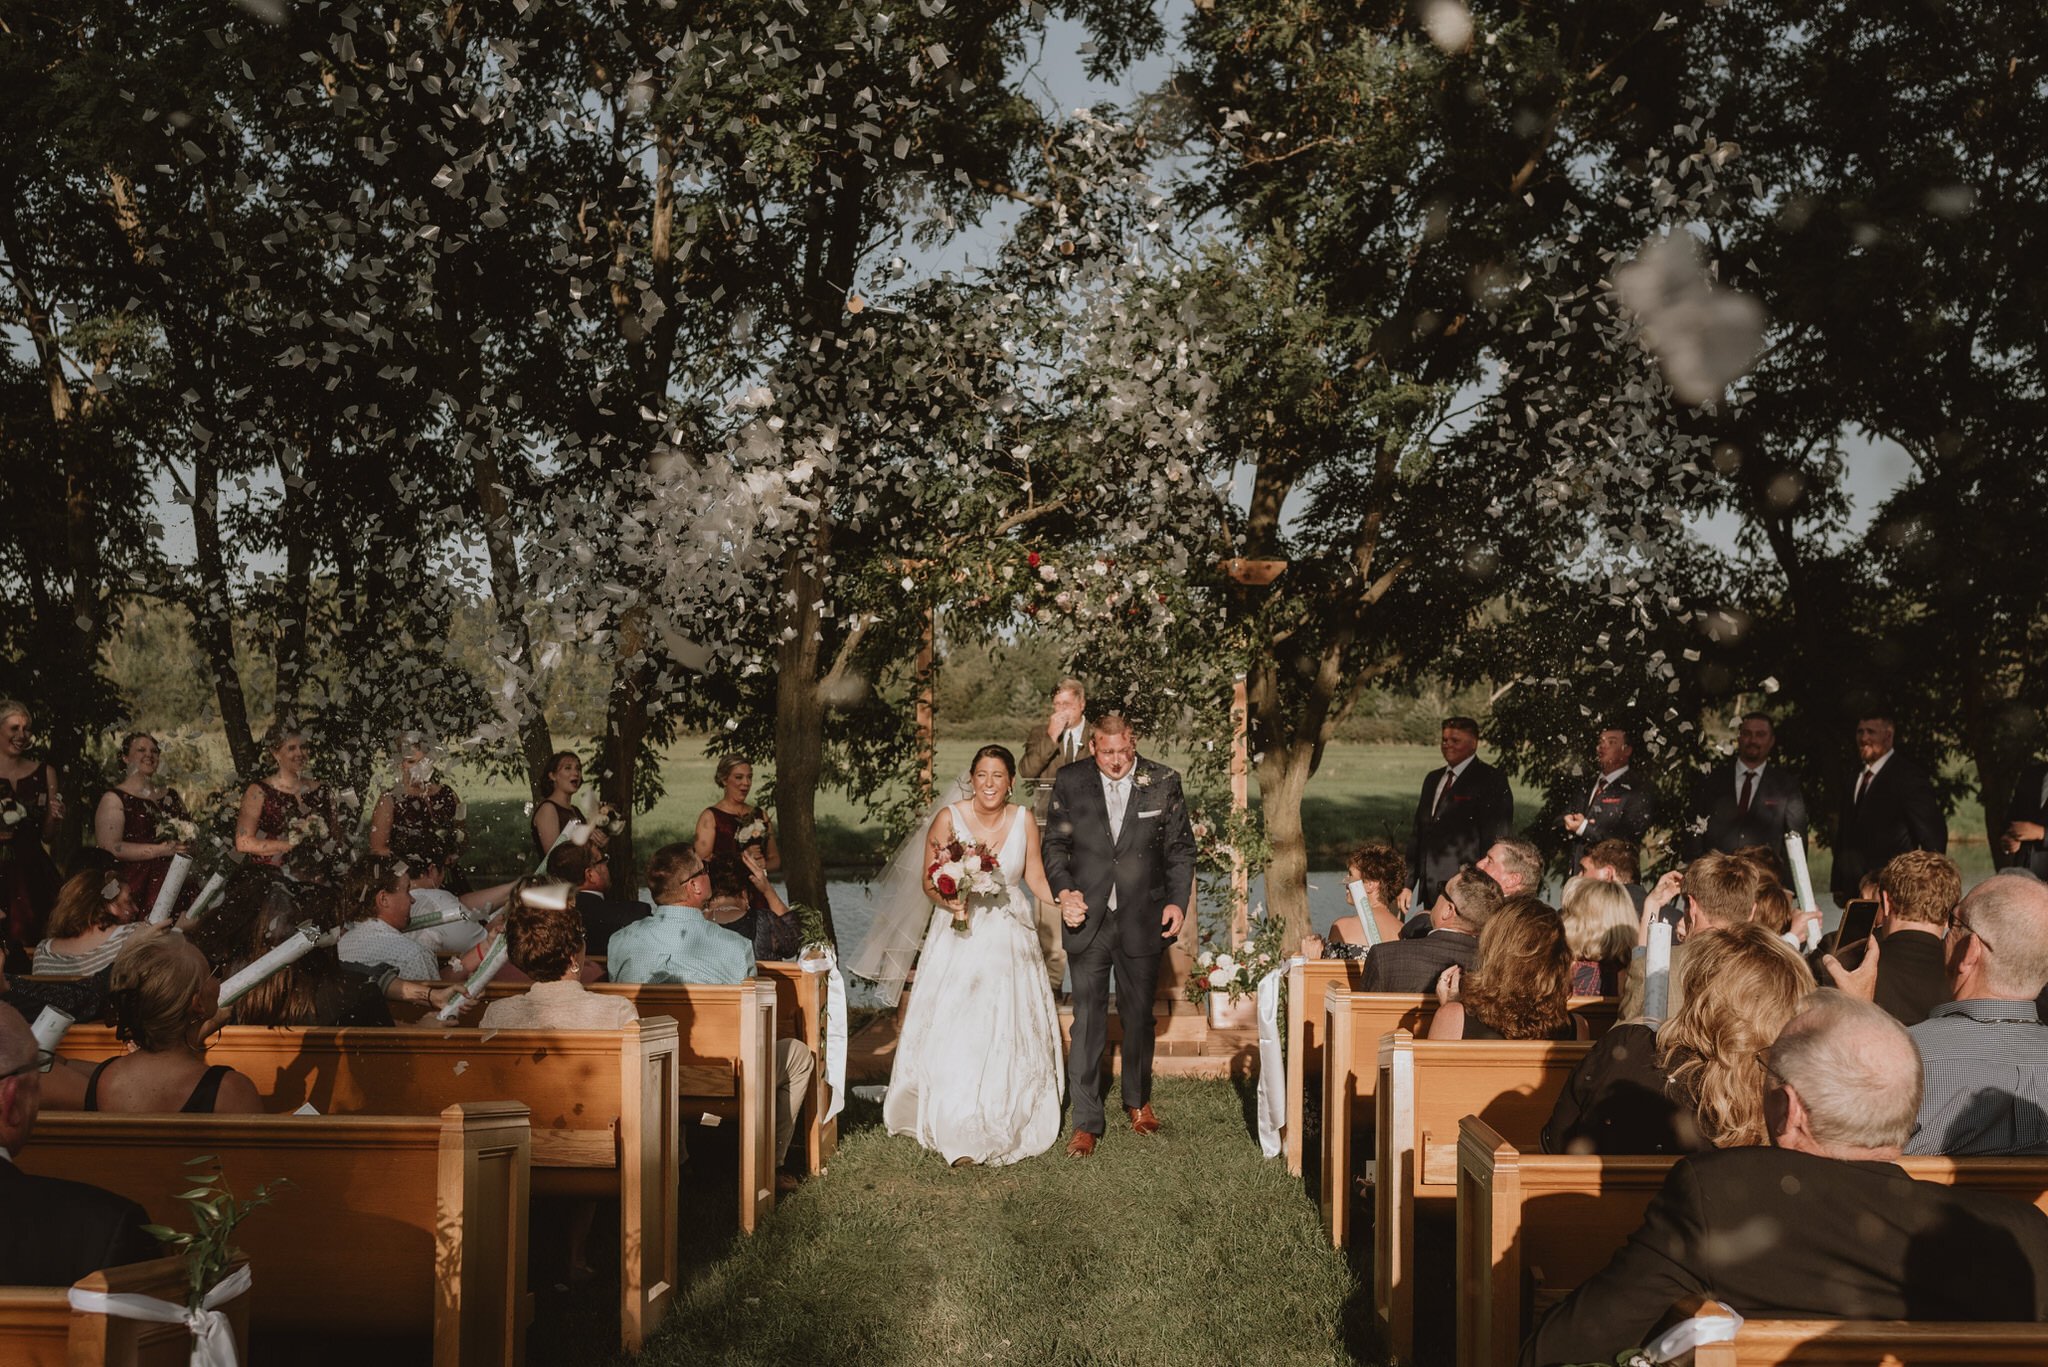 Kaylie-Sirek-Photography-Backyard-Wedding-113.jpg